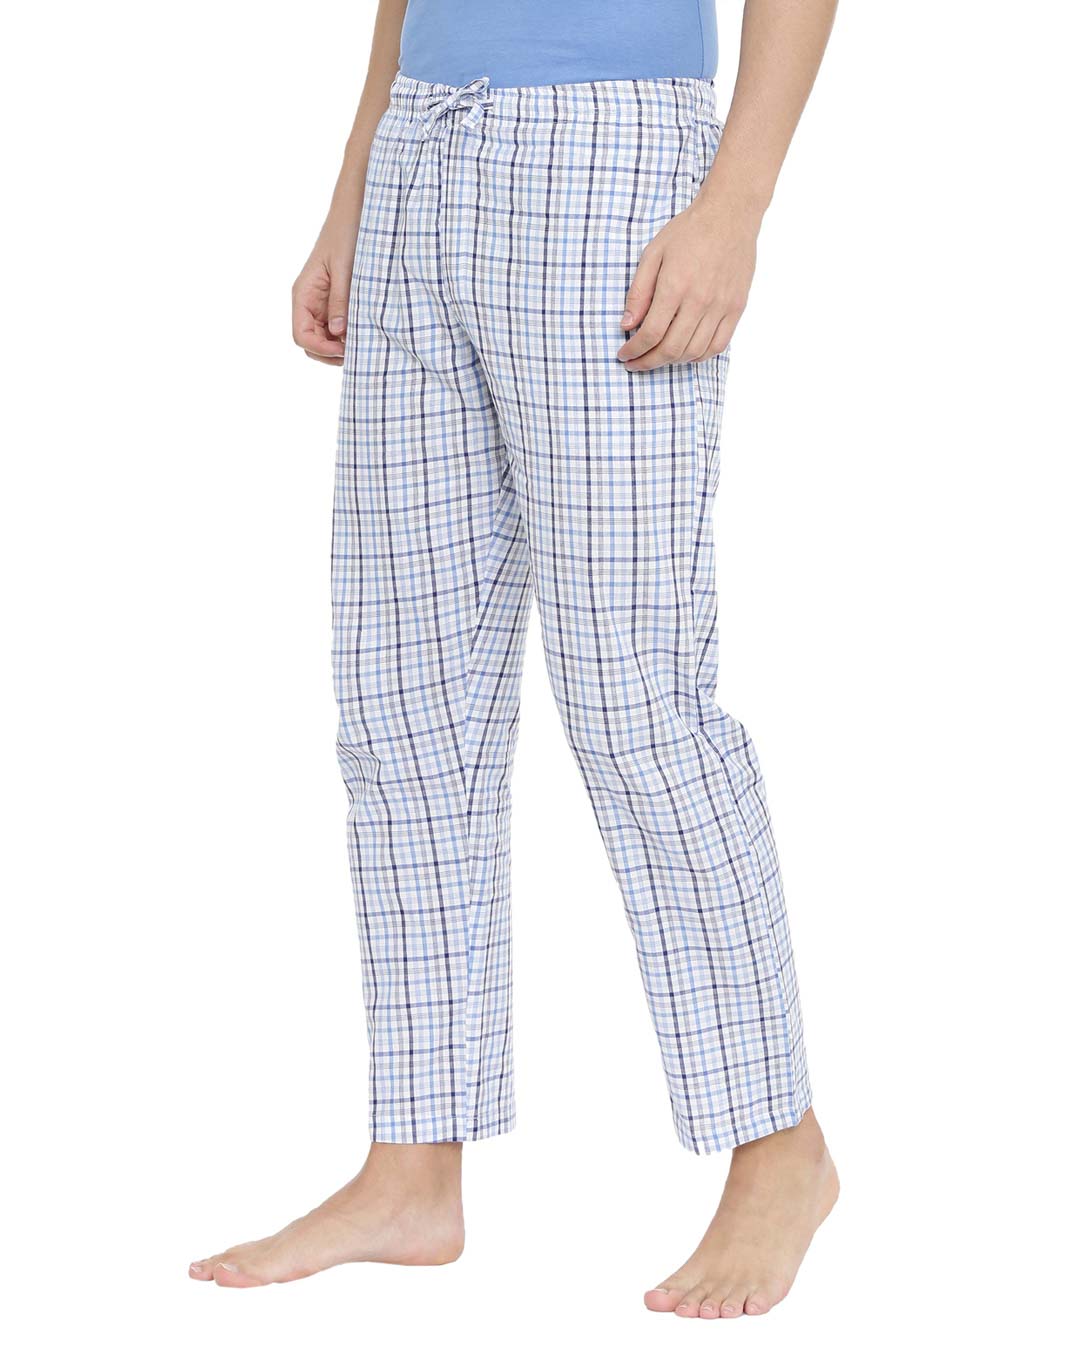 Shop Blue And White Checked Pyjamas-Back